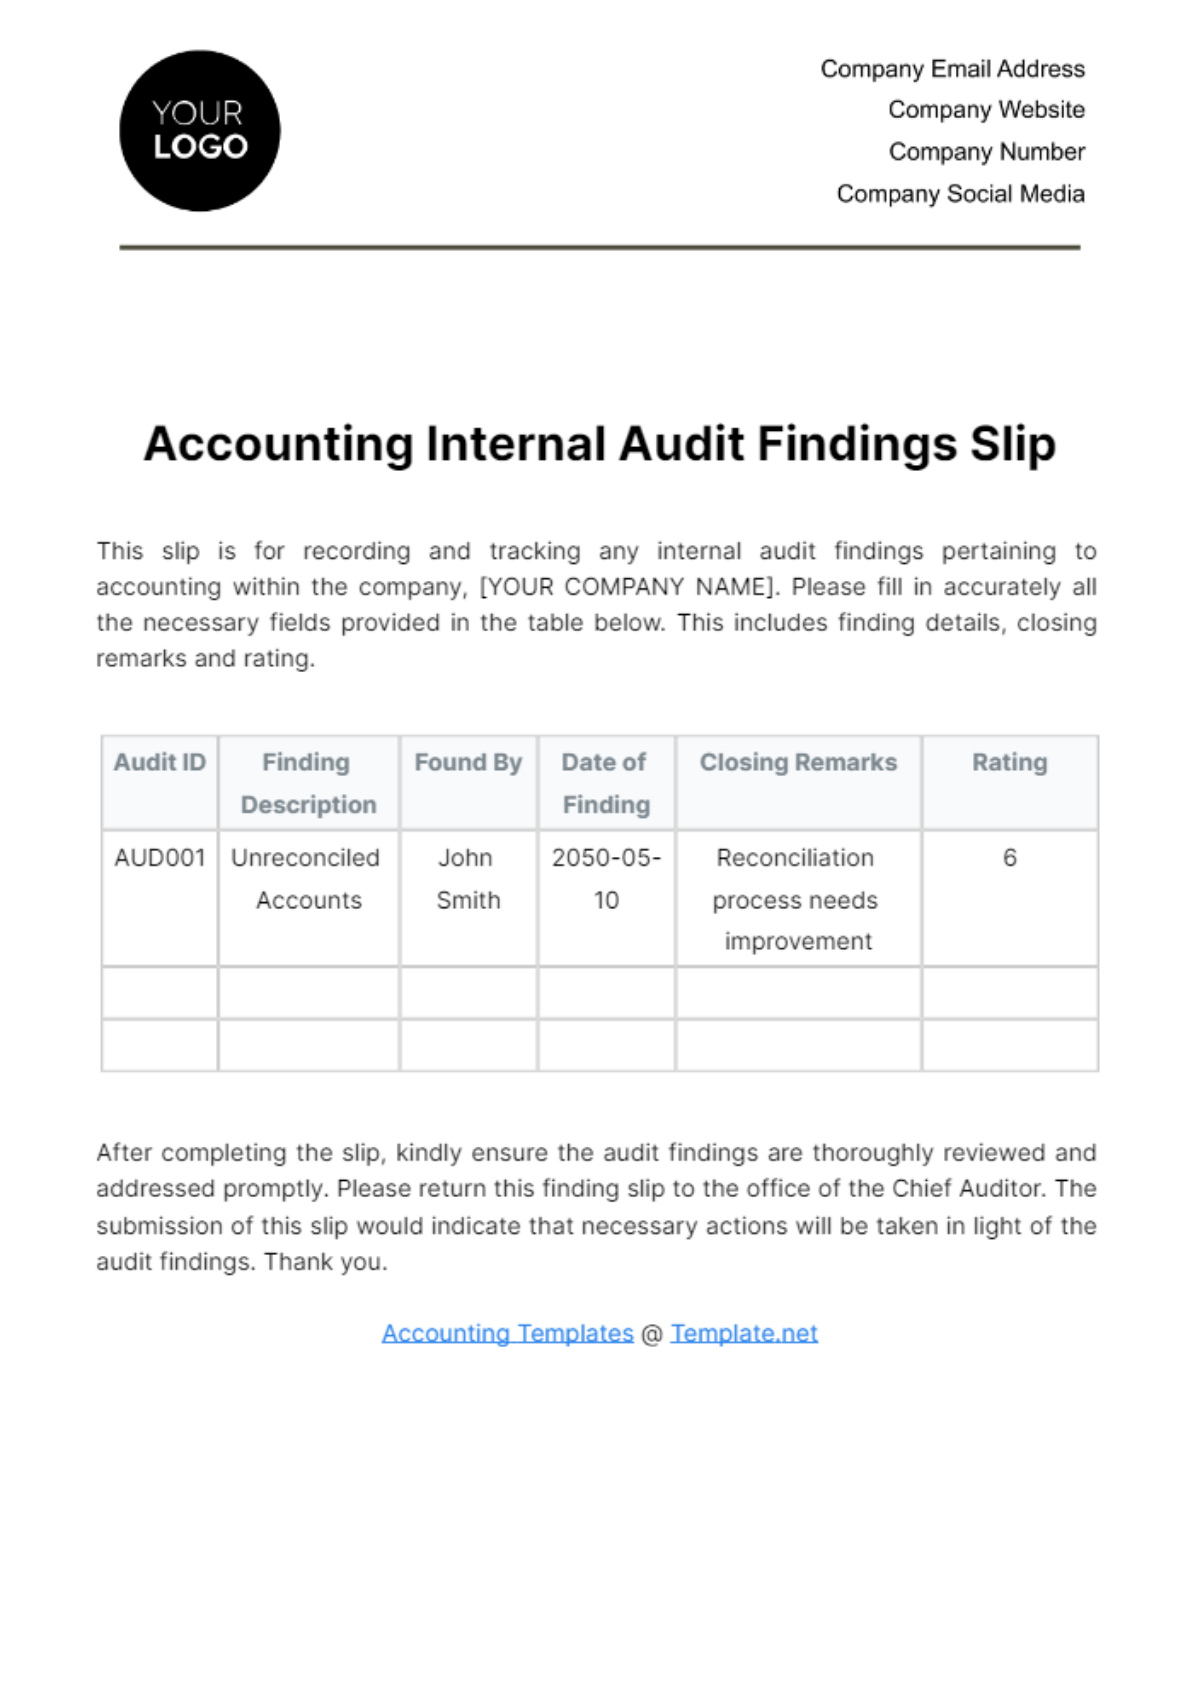 Free Accounting Internal Audit Findings Slip Template